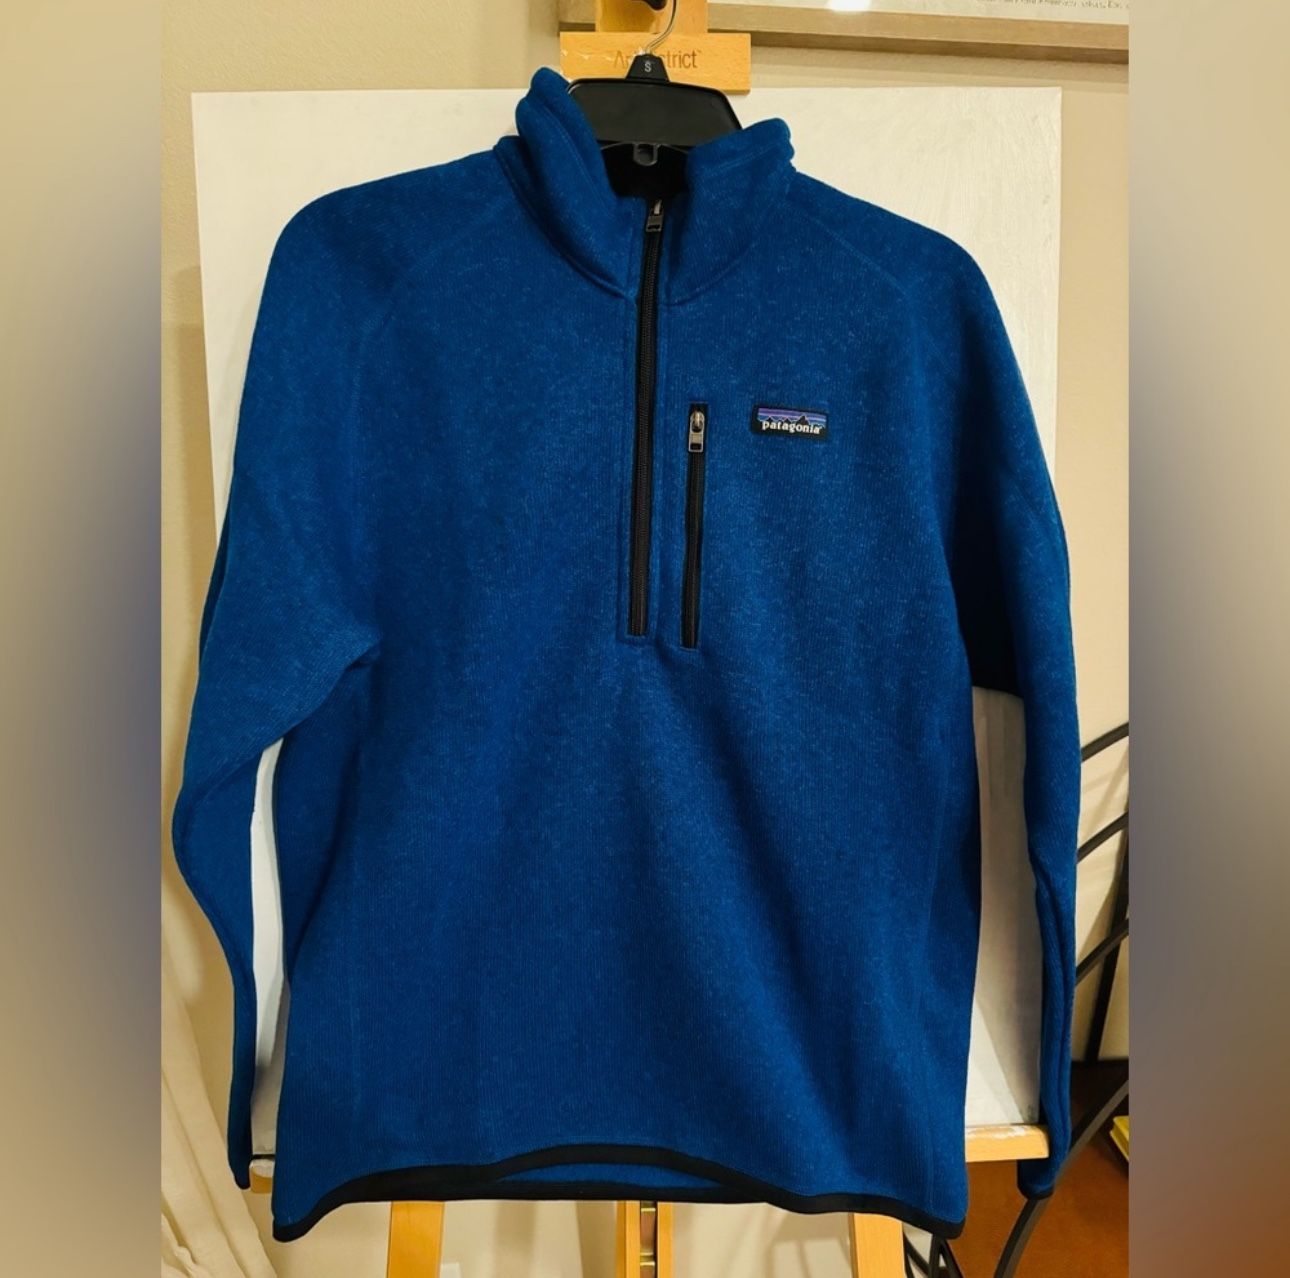 NWOT Patagonia Better Sweater 1/4 Zip Jacket in Blue for Men sz S